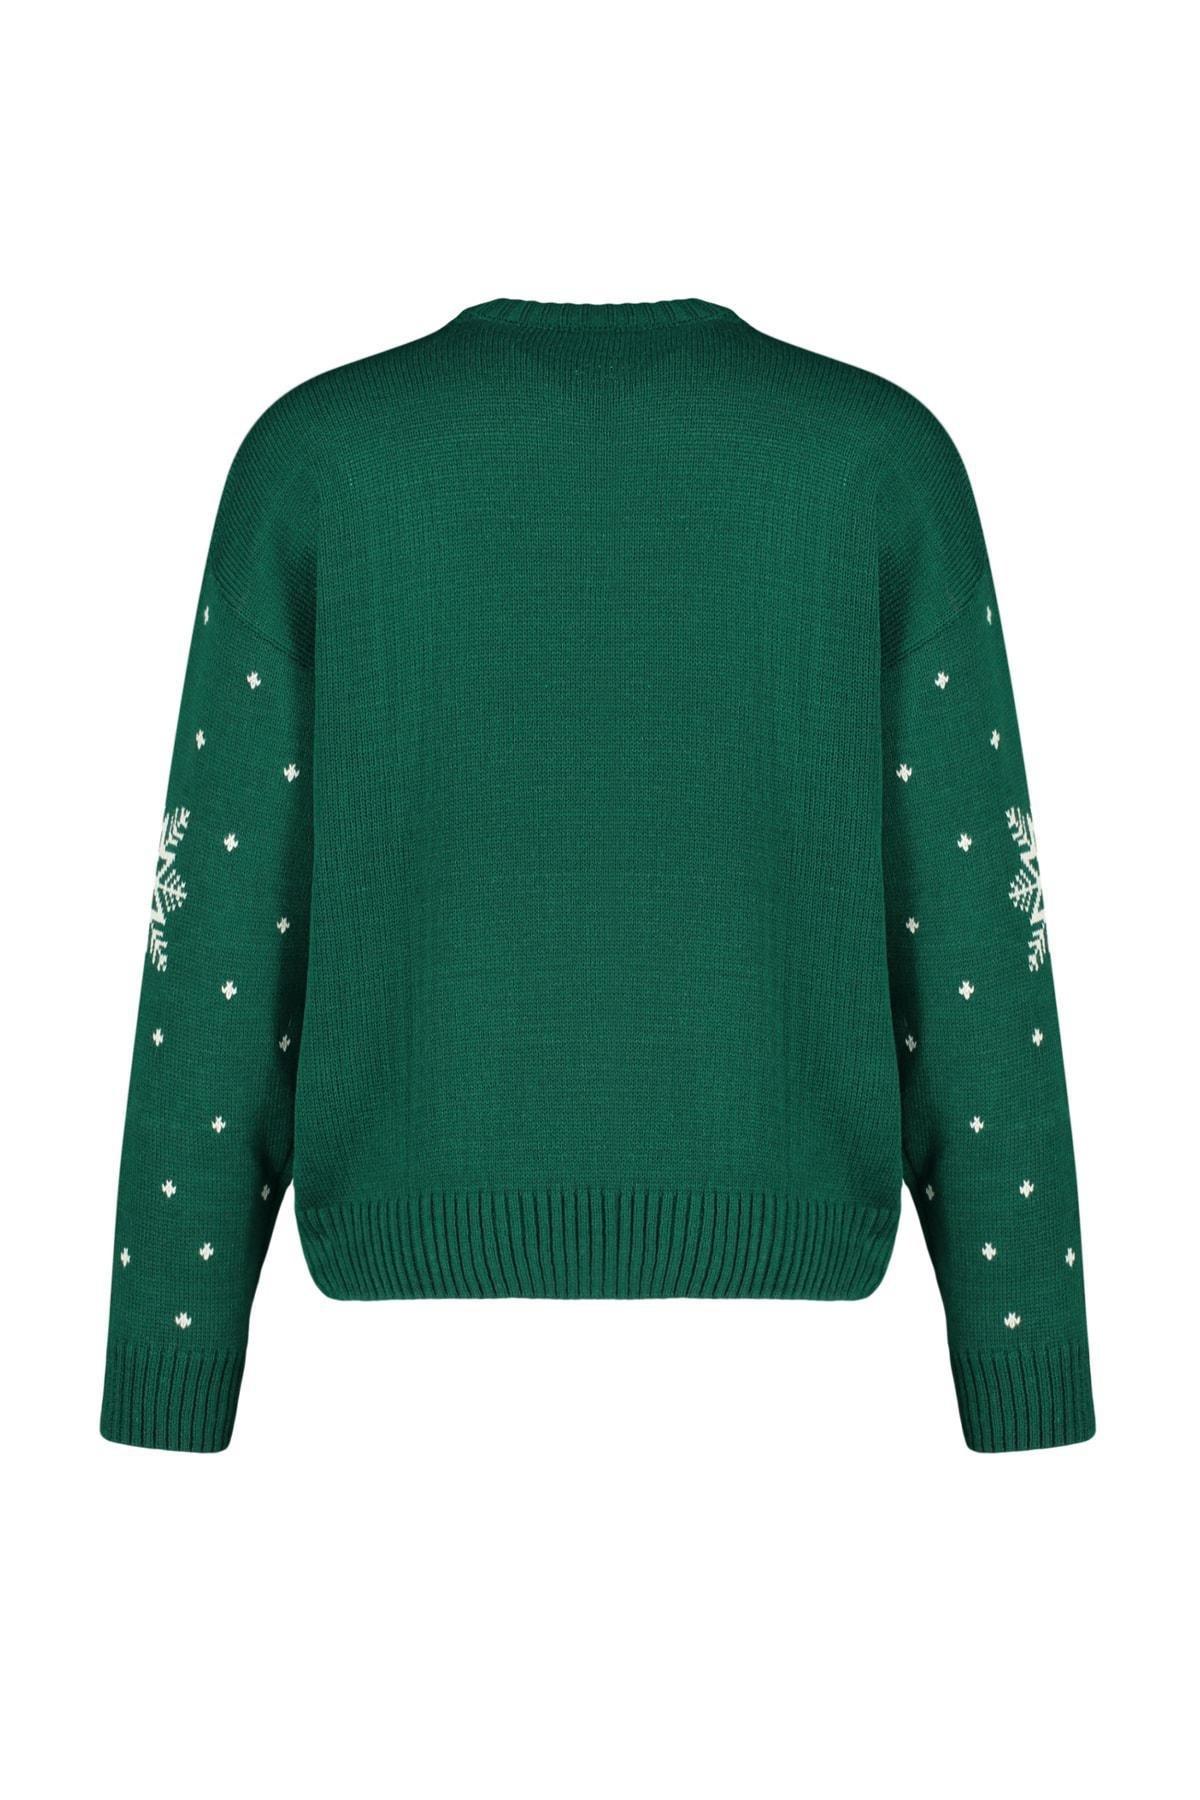 Trendyol - Green Christmas Sweater